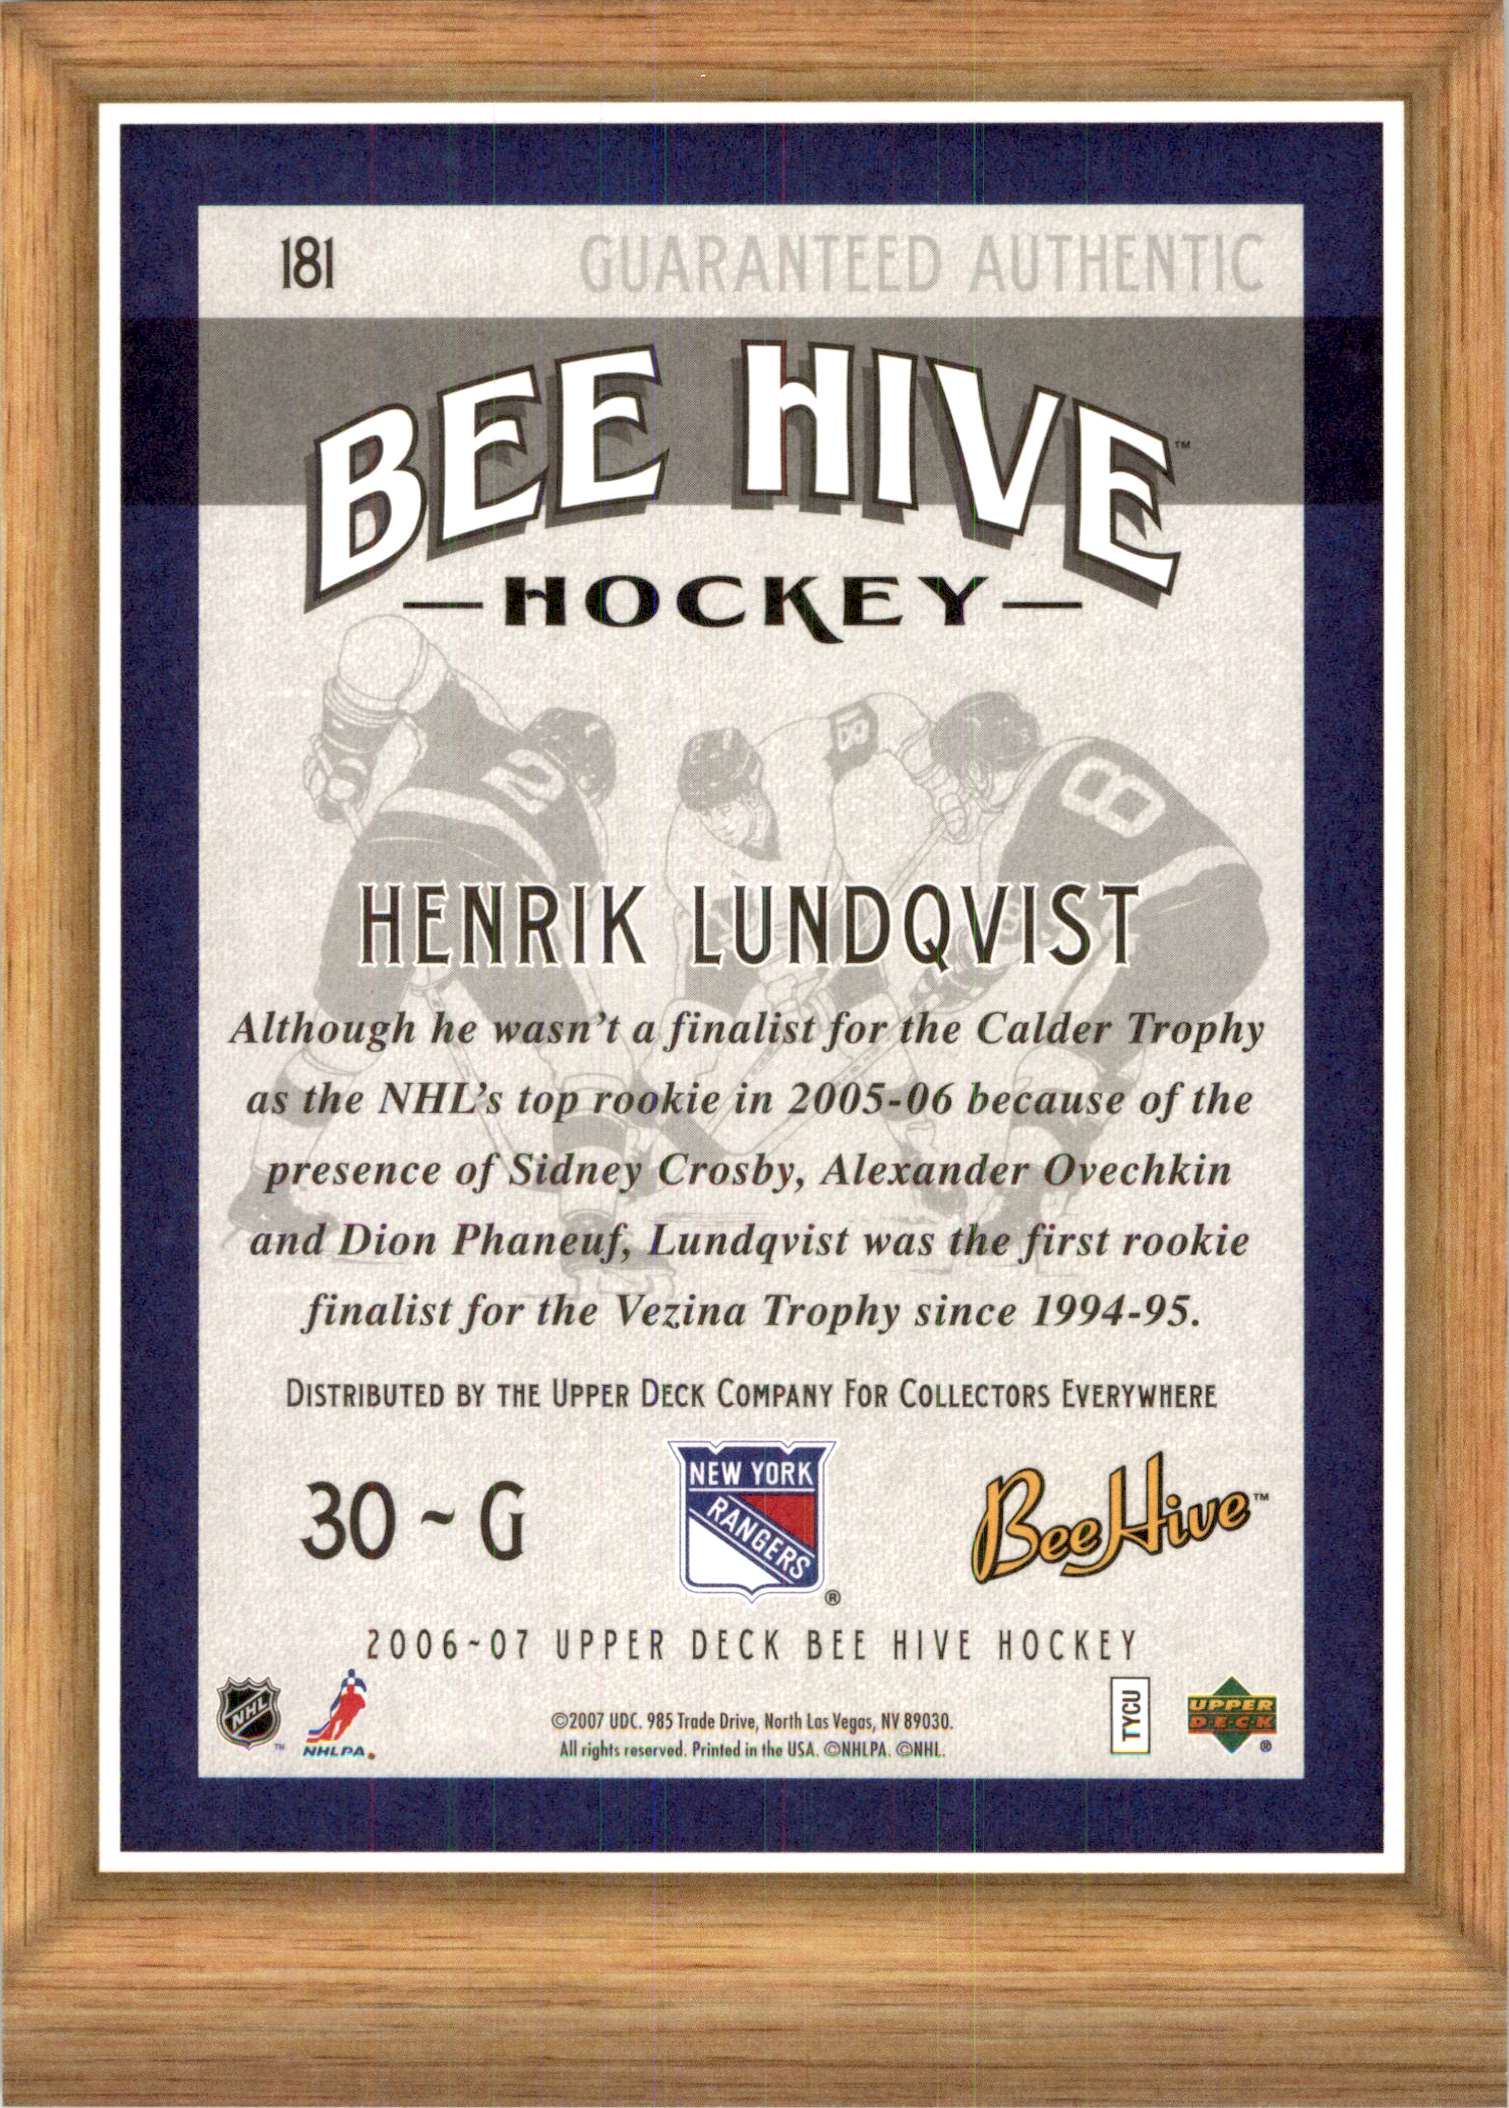 2006-07 Upper Deck Beehive 5X7 Henrik Lundqvist #181 card back image